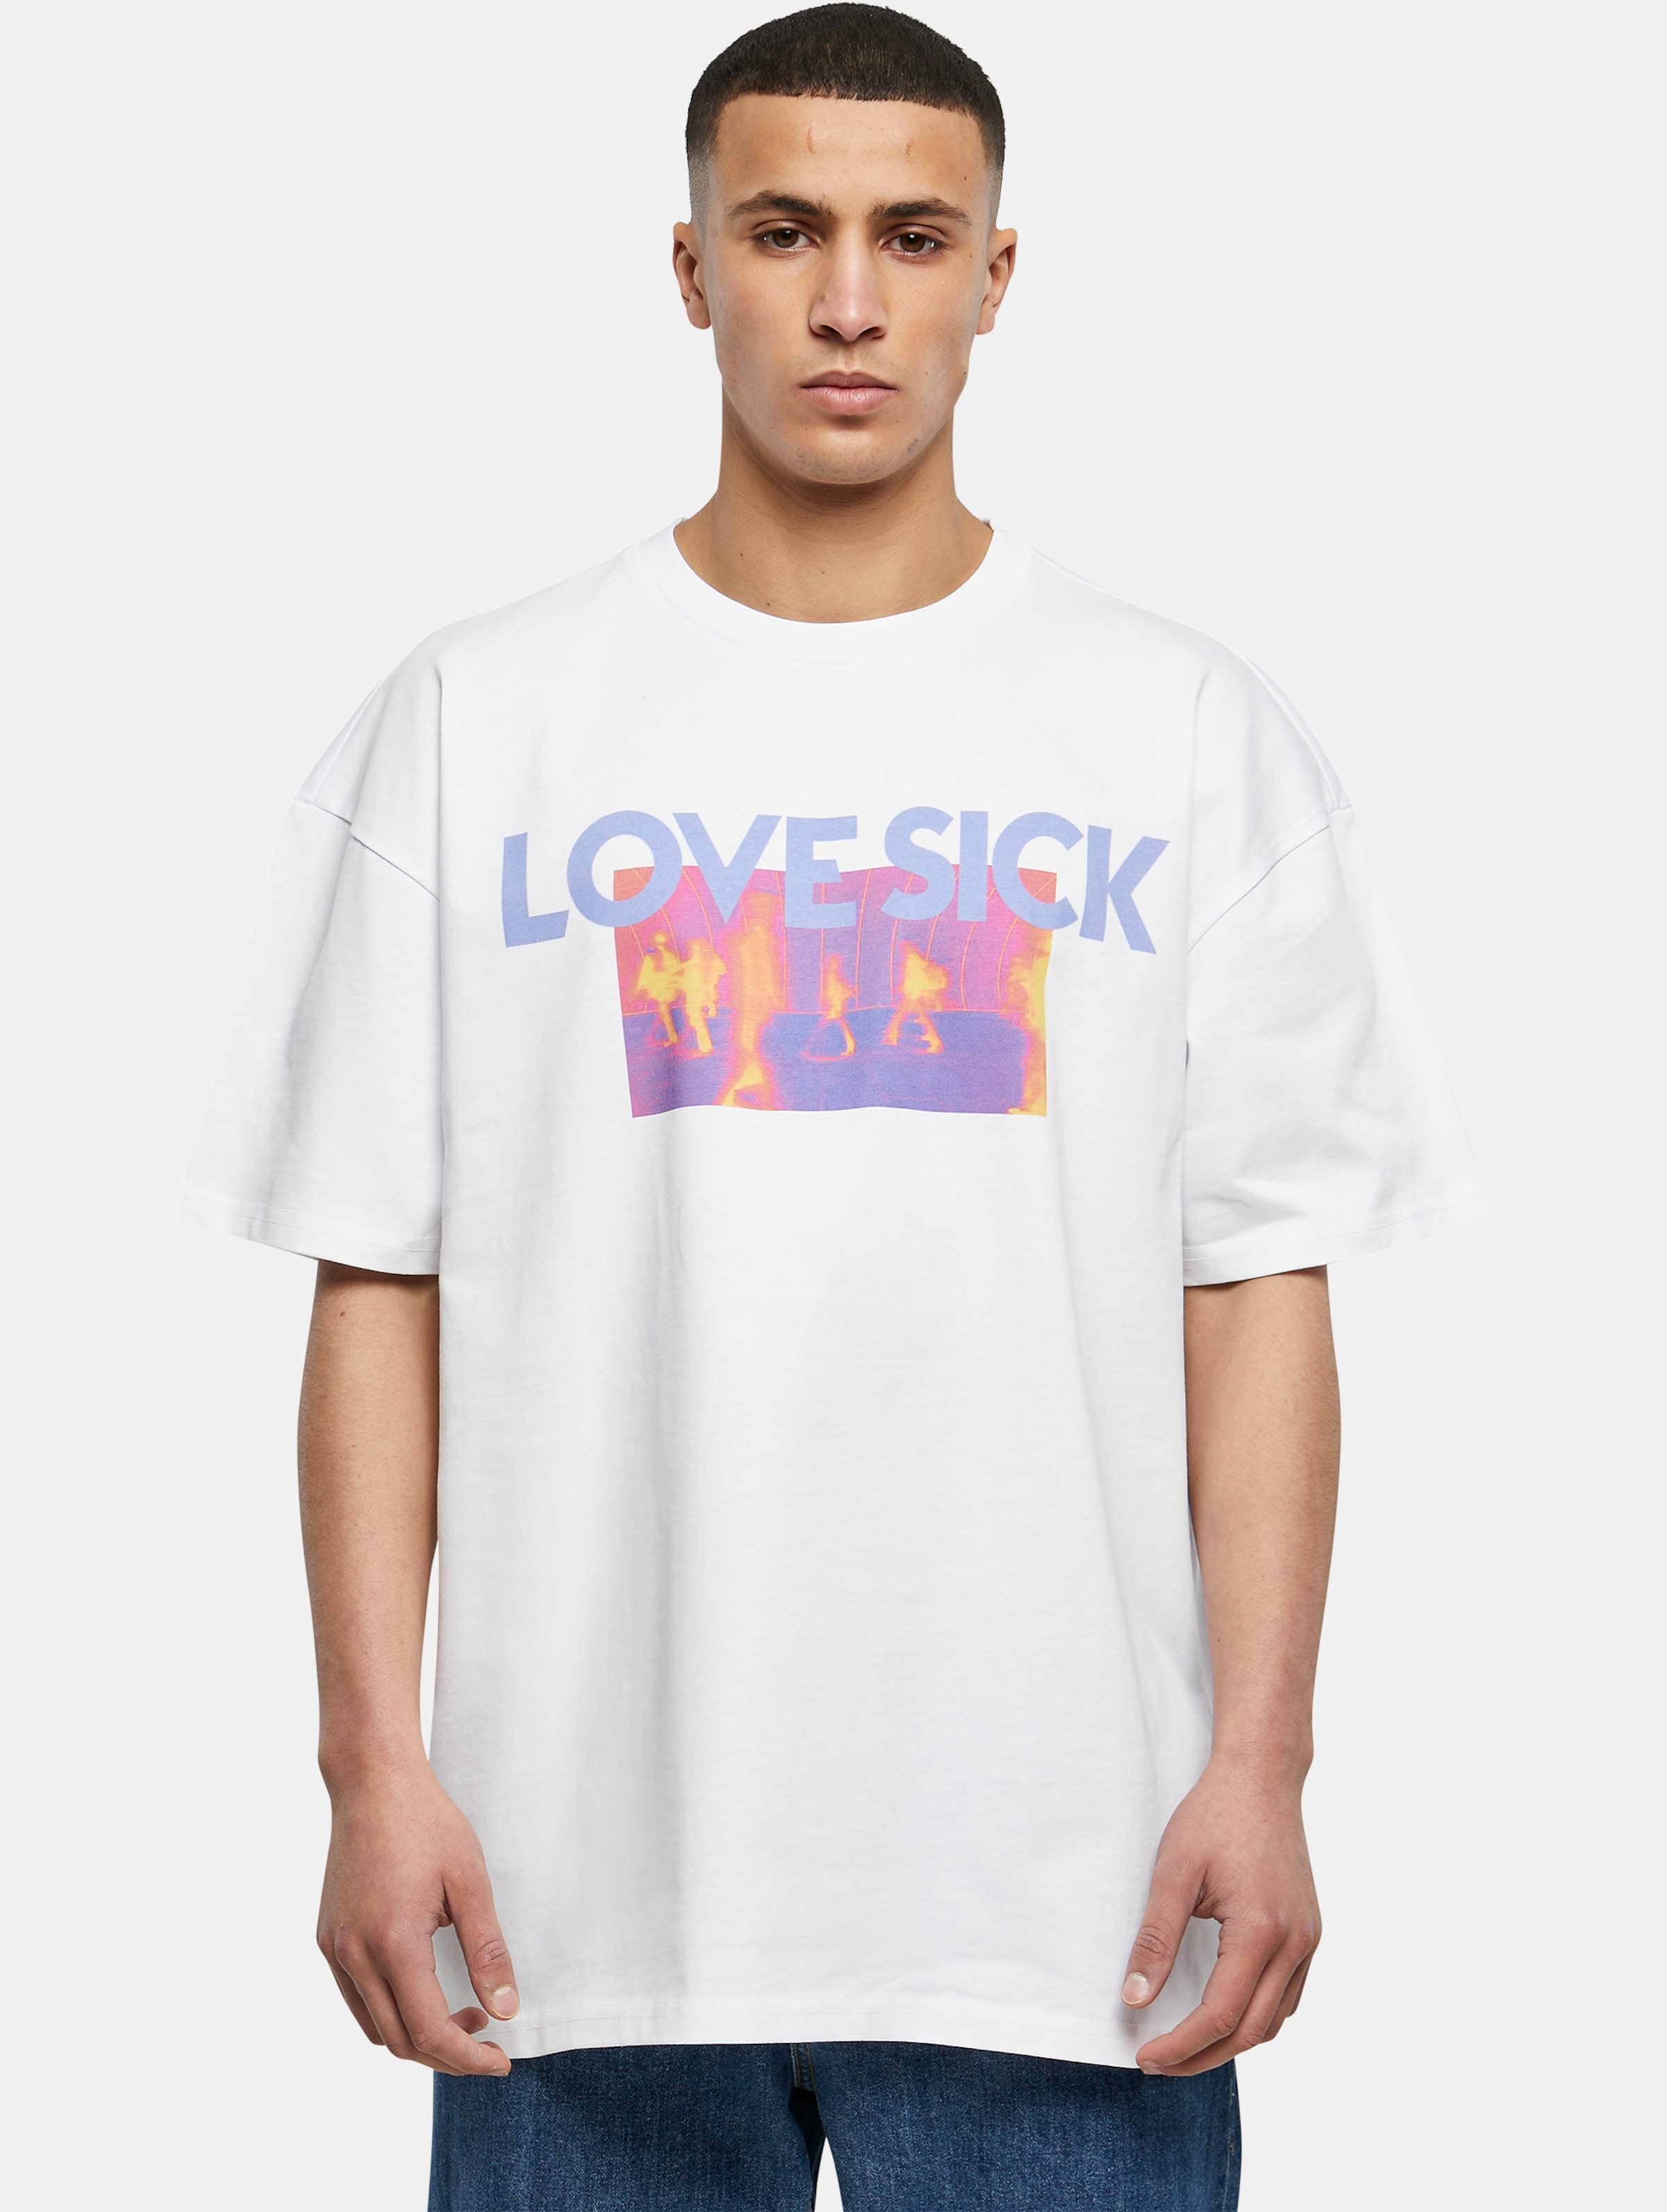 9N1M SENSE LOVESICK T-Shirt Männer,Unisex op kleur wit, Maat L